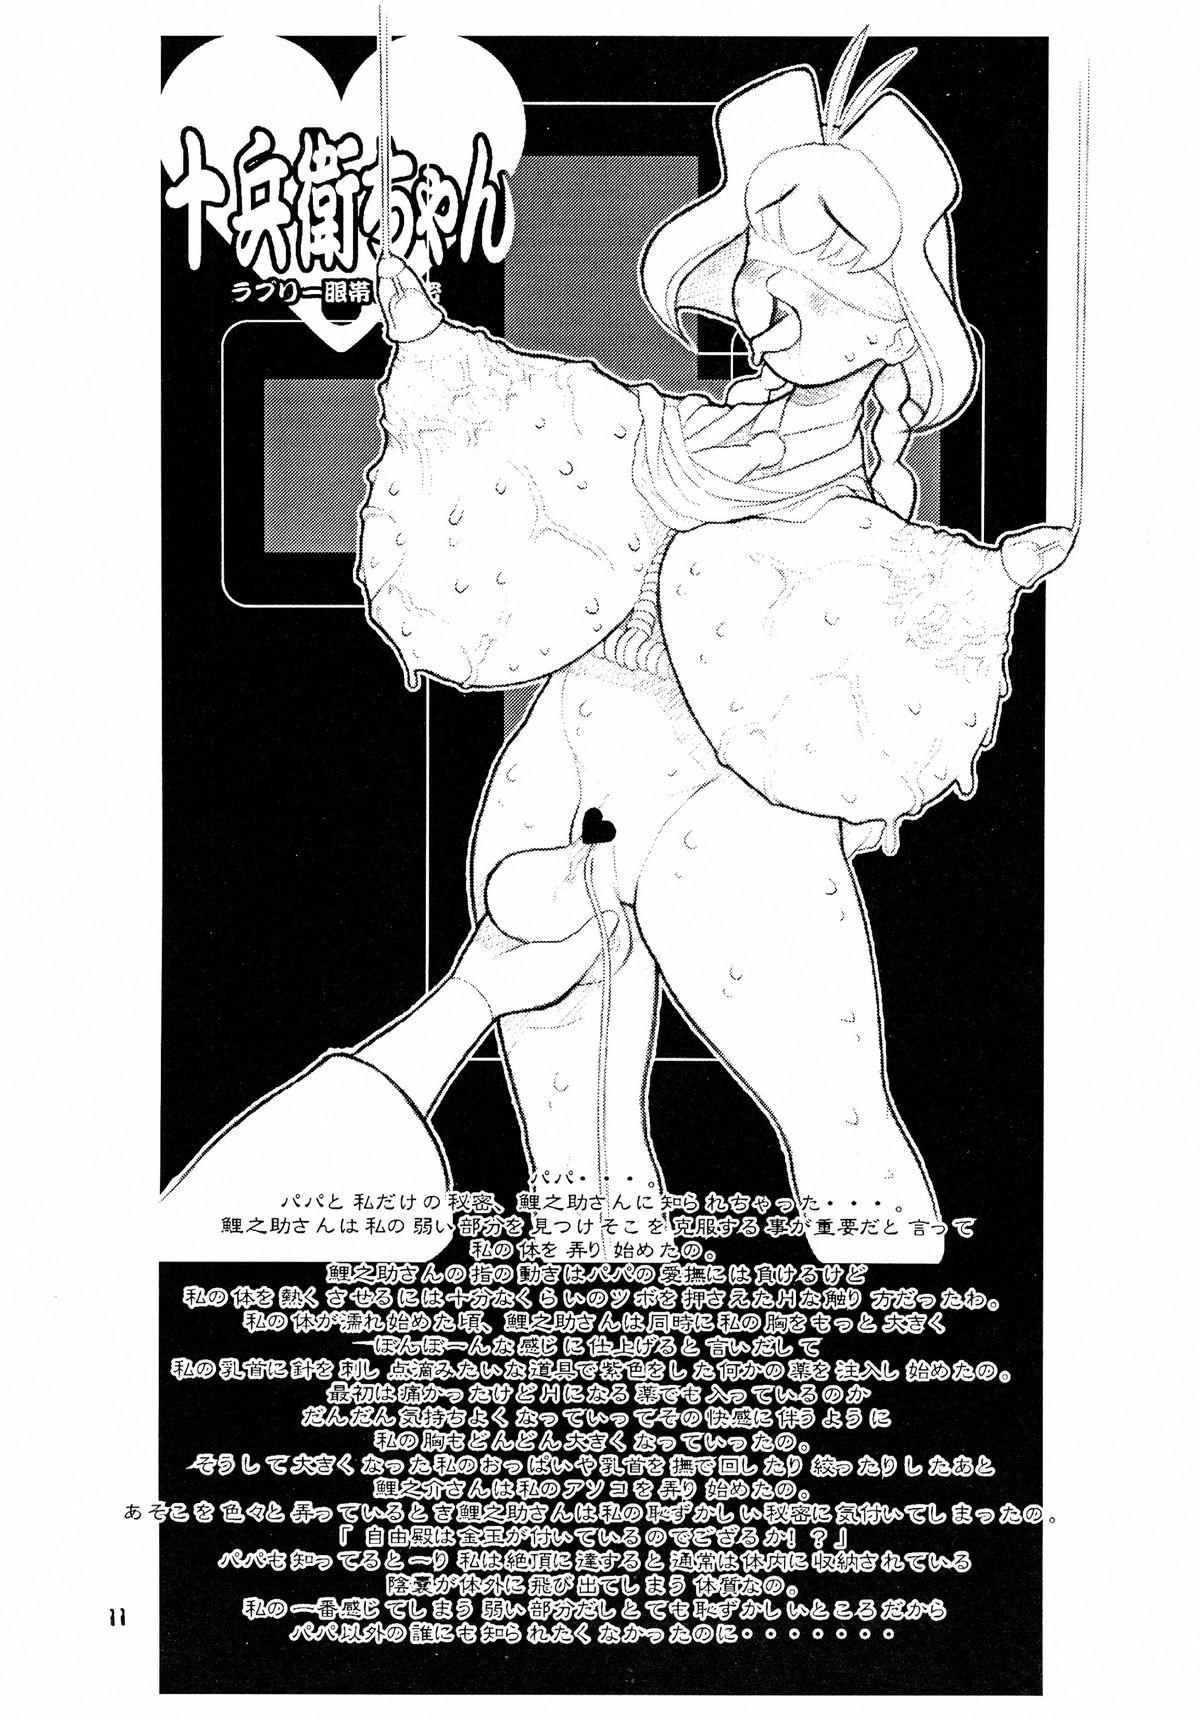 Housewife MaD ArtistS ZyuubeityanN - Jubei chan Tia - Page 11